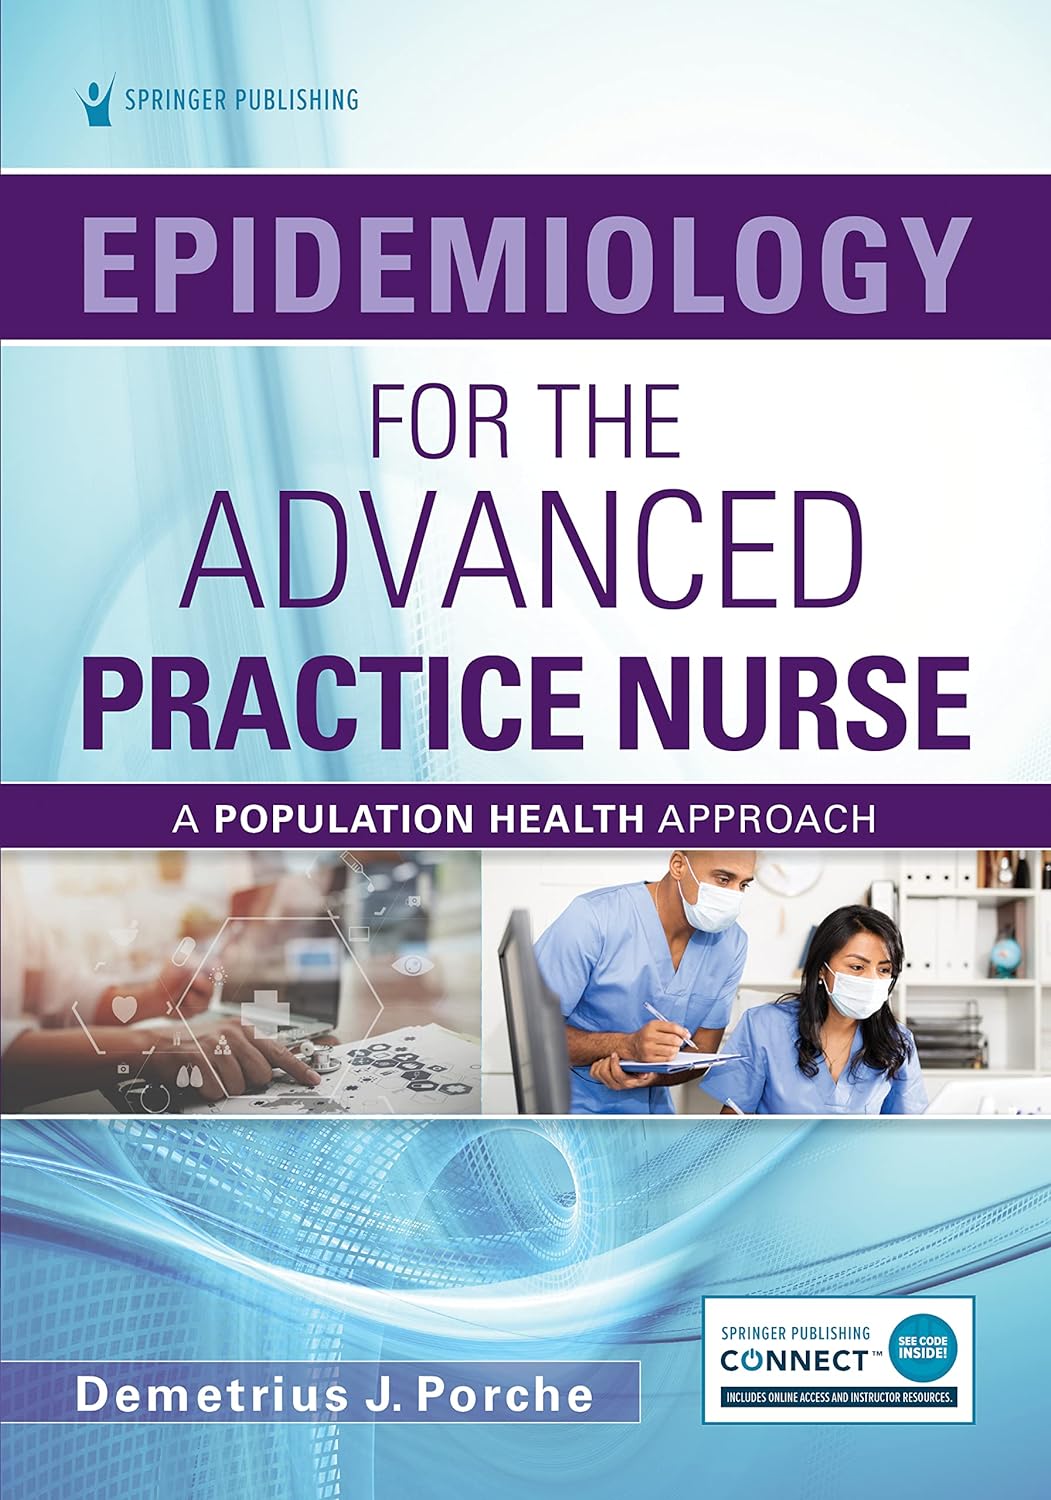 Epidemiology for the Advanced Practice Nurse: A Population Health Approach by Demetrius Porche DNS PhD ANEF FACHE FAANP FAAN 